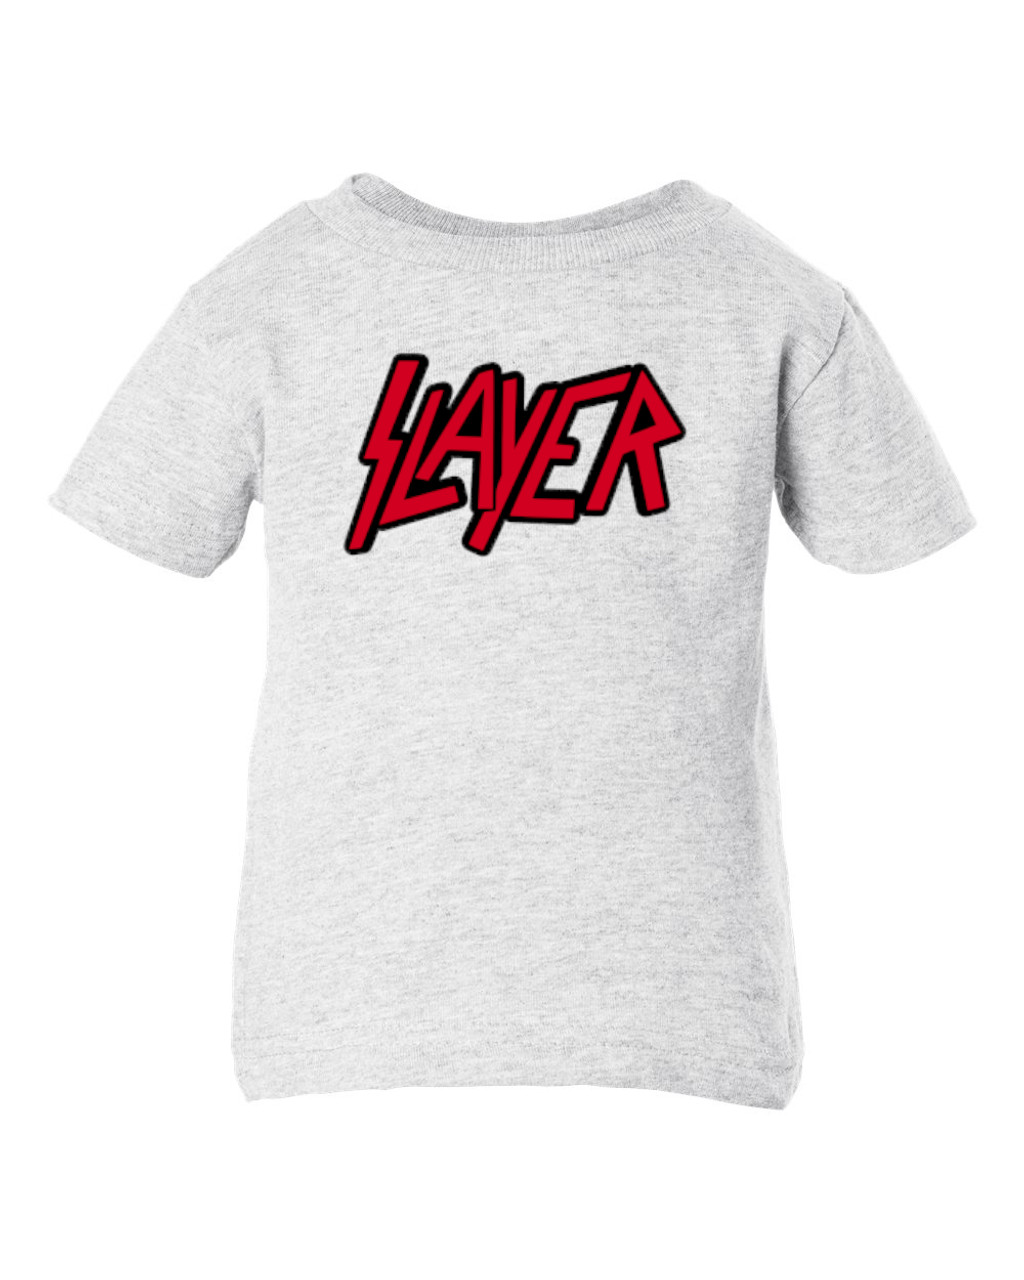 Slayer Thrash Speed Metal Music Baby Infant & Toddler Ash Concert T-Shirt